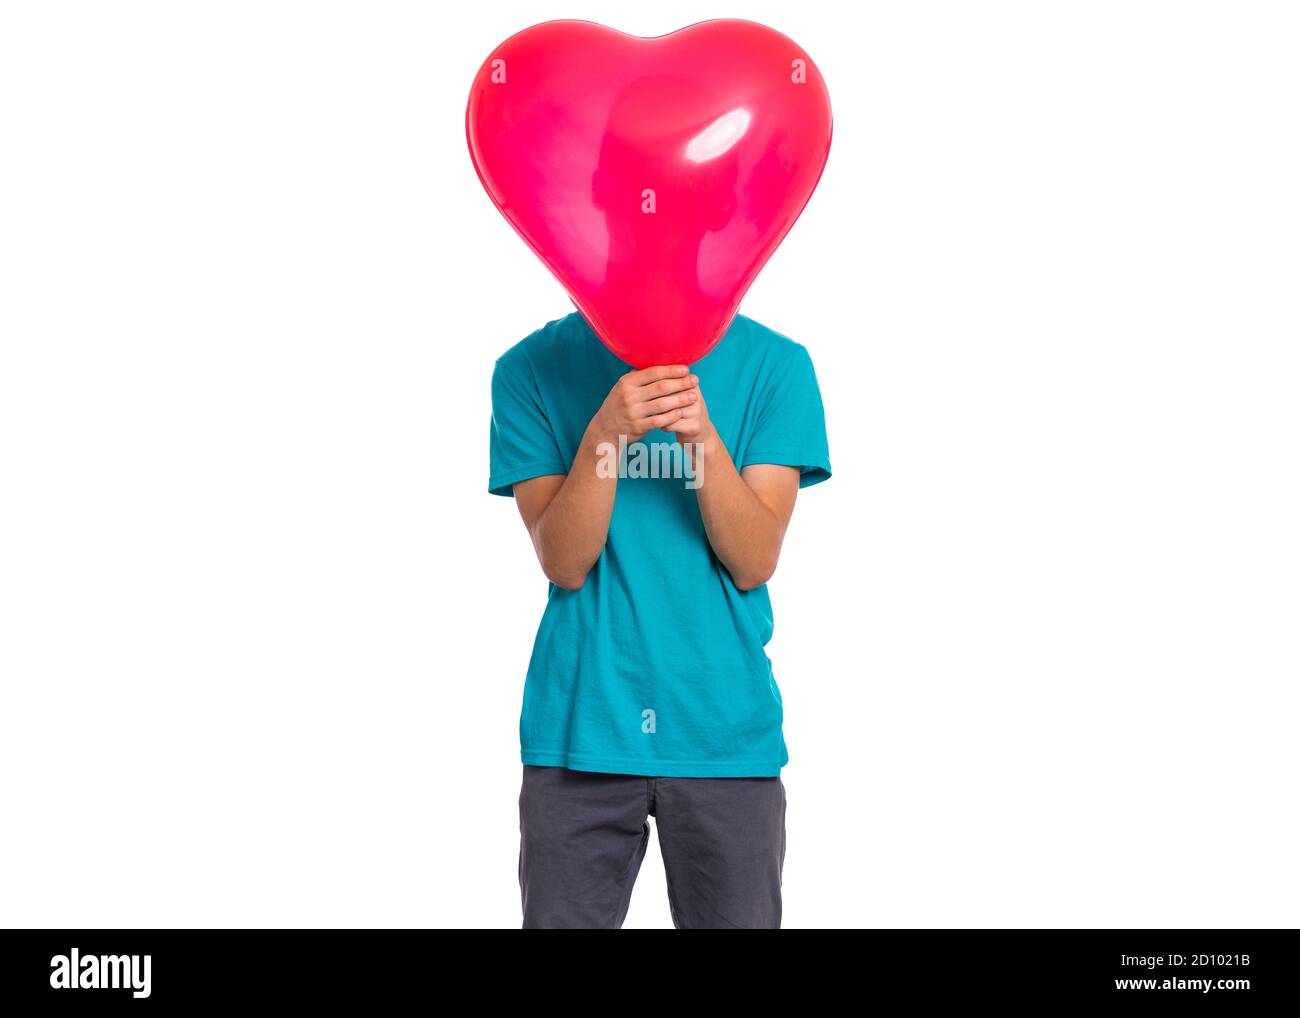 Boy with heart shaped balloon Stock Photo